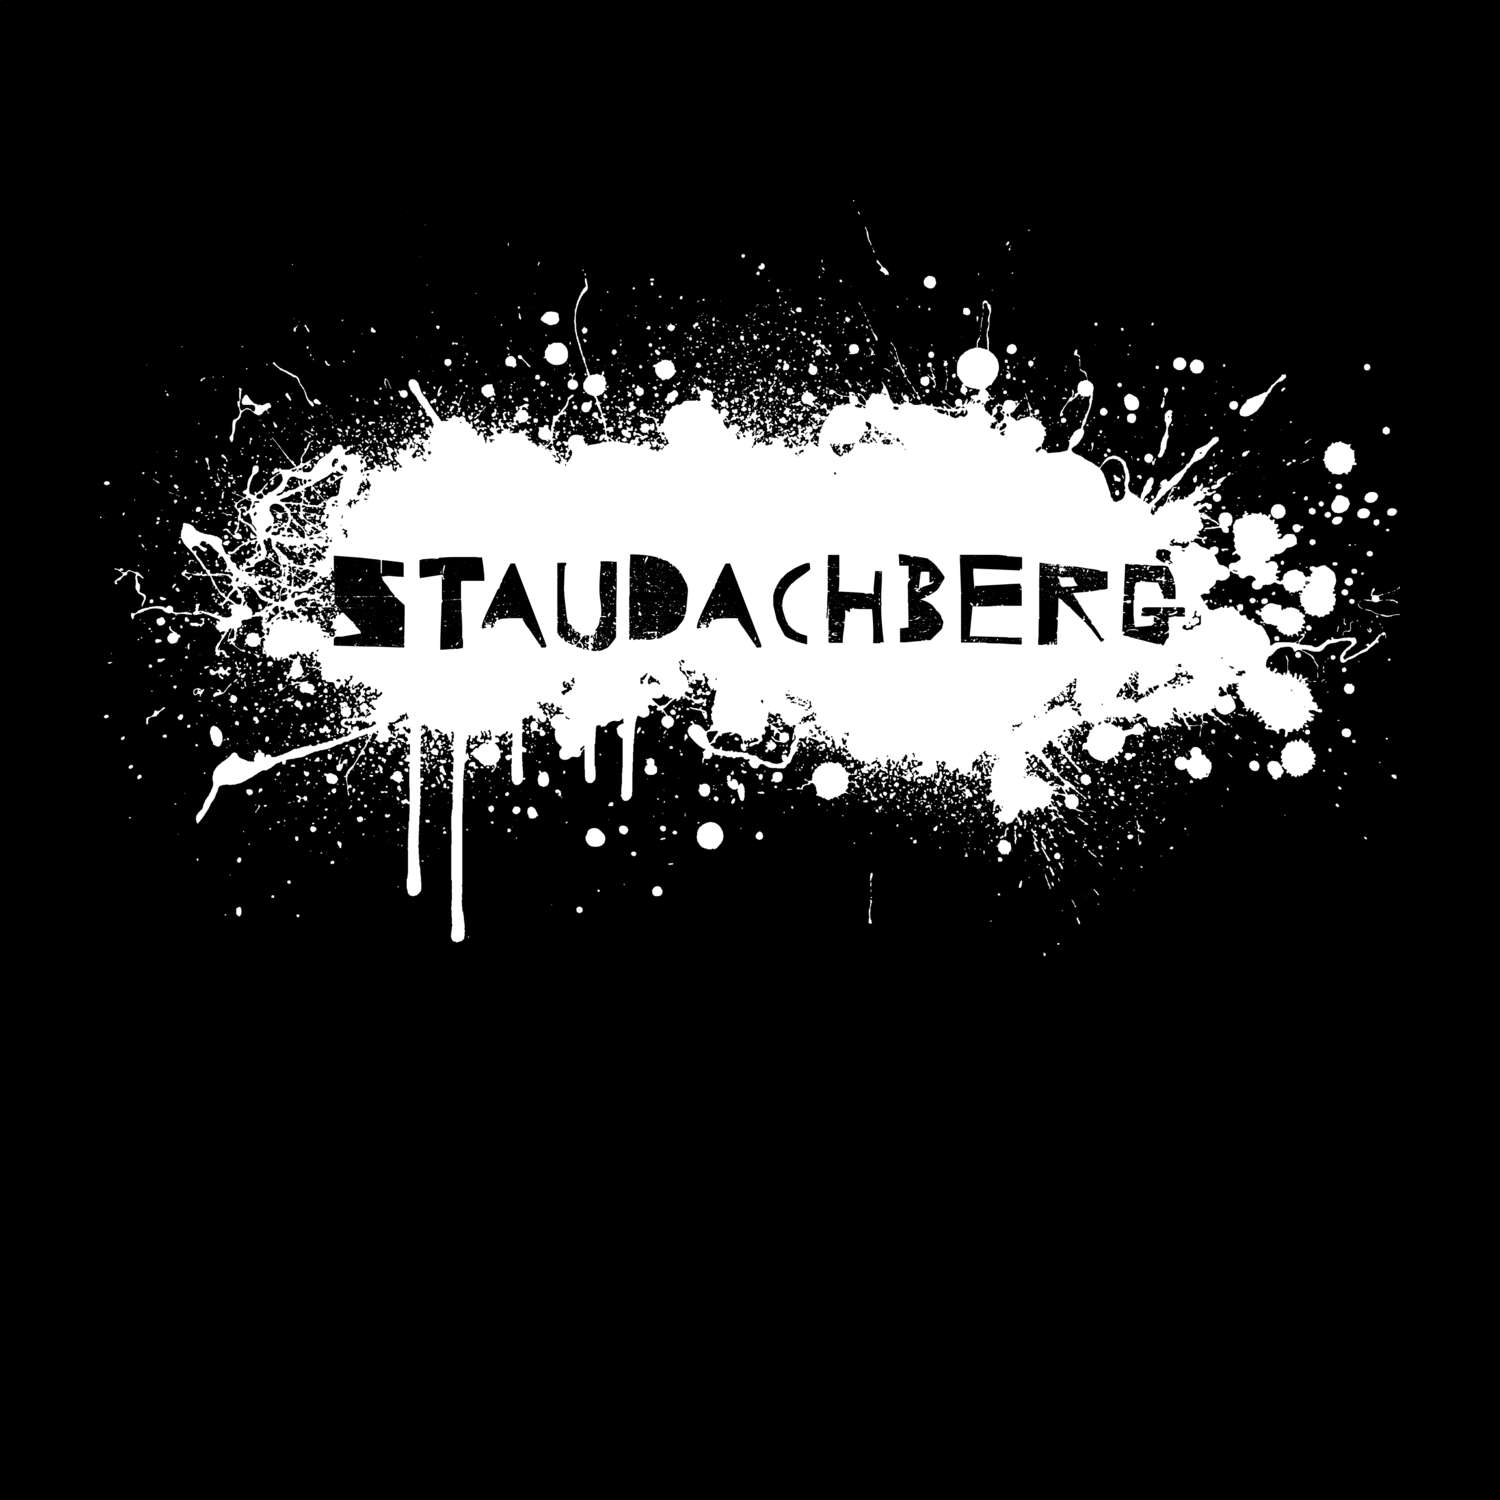 Staudachberg T-Shirt »Paint Splash Punk«